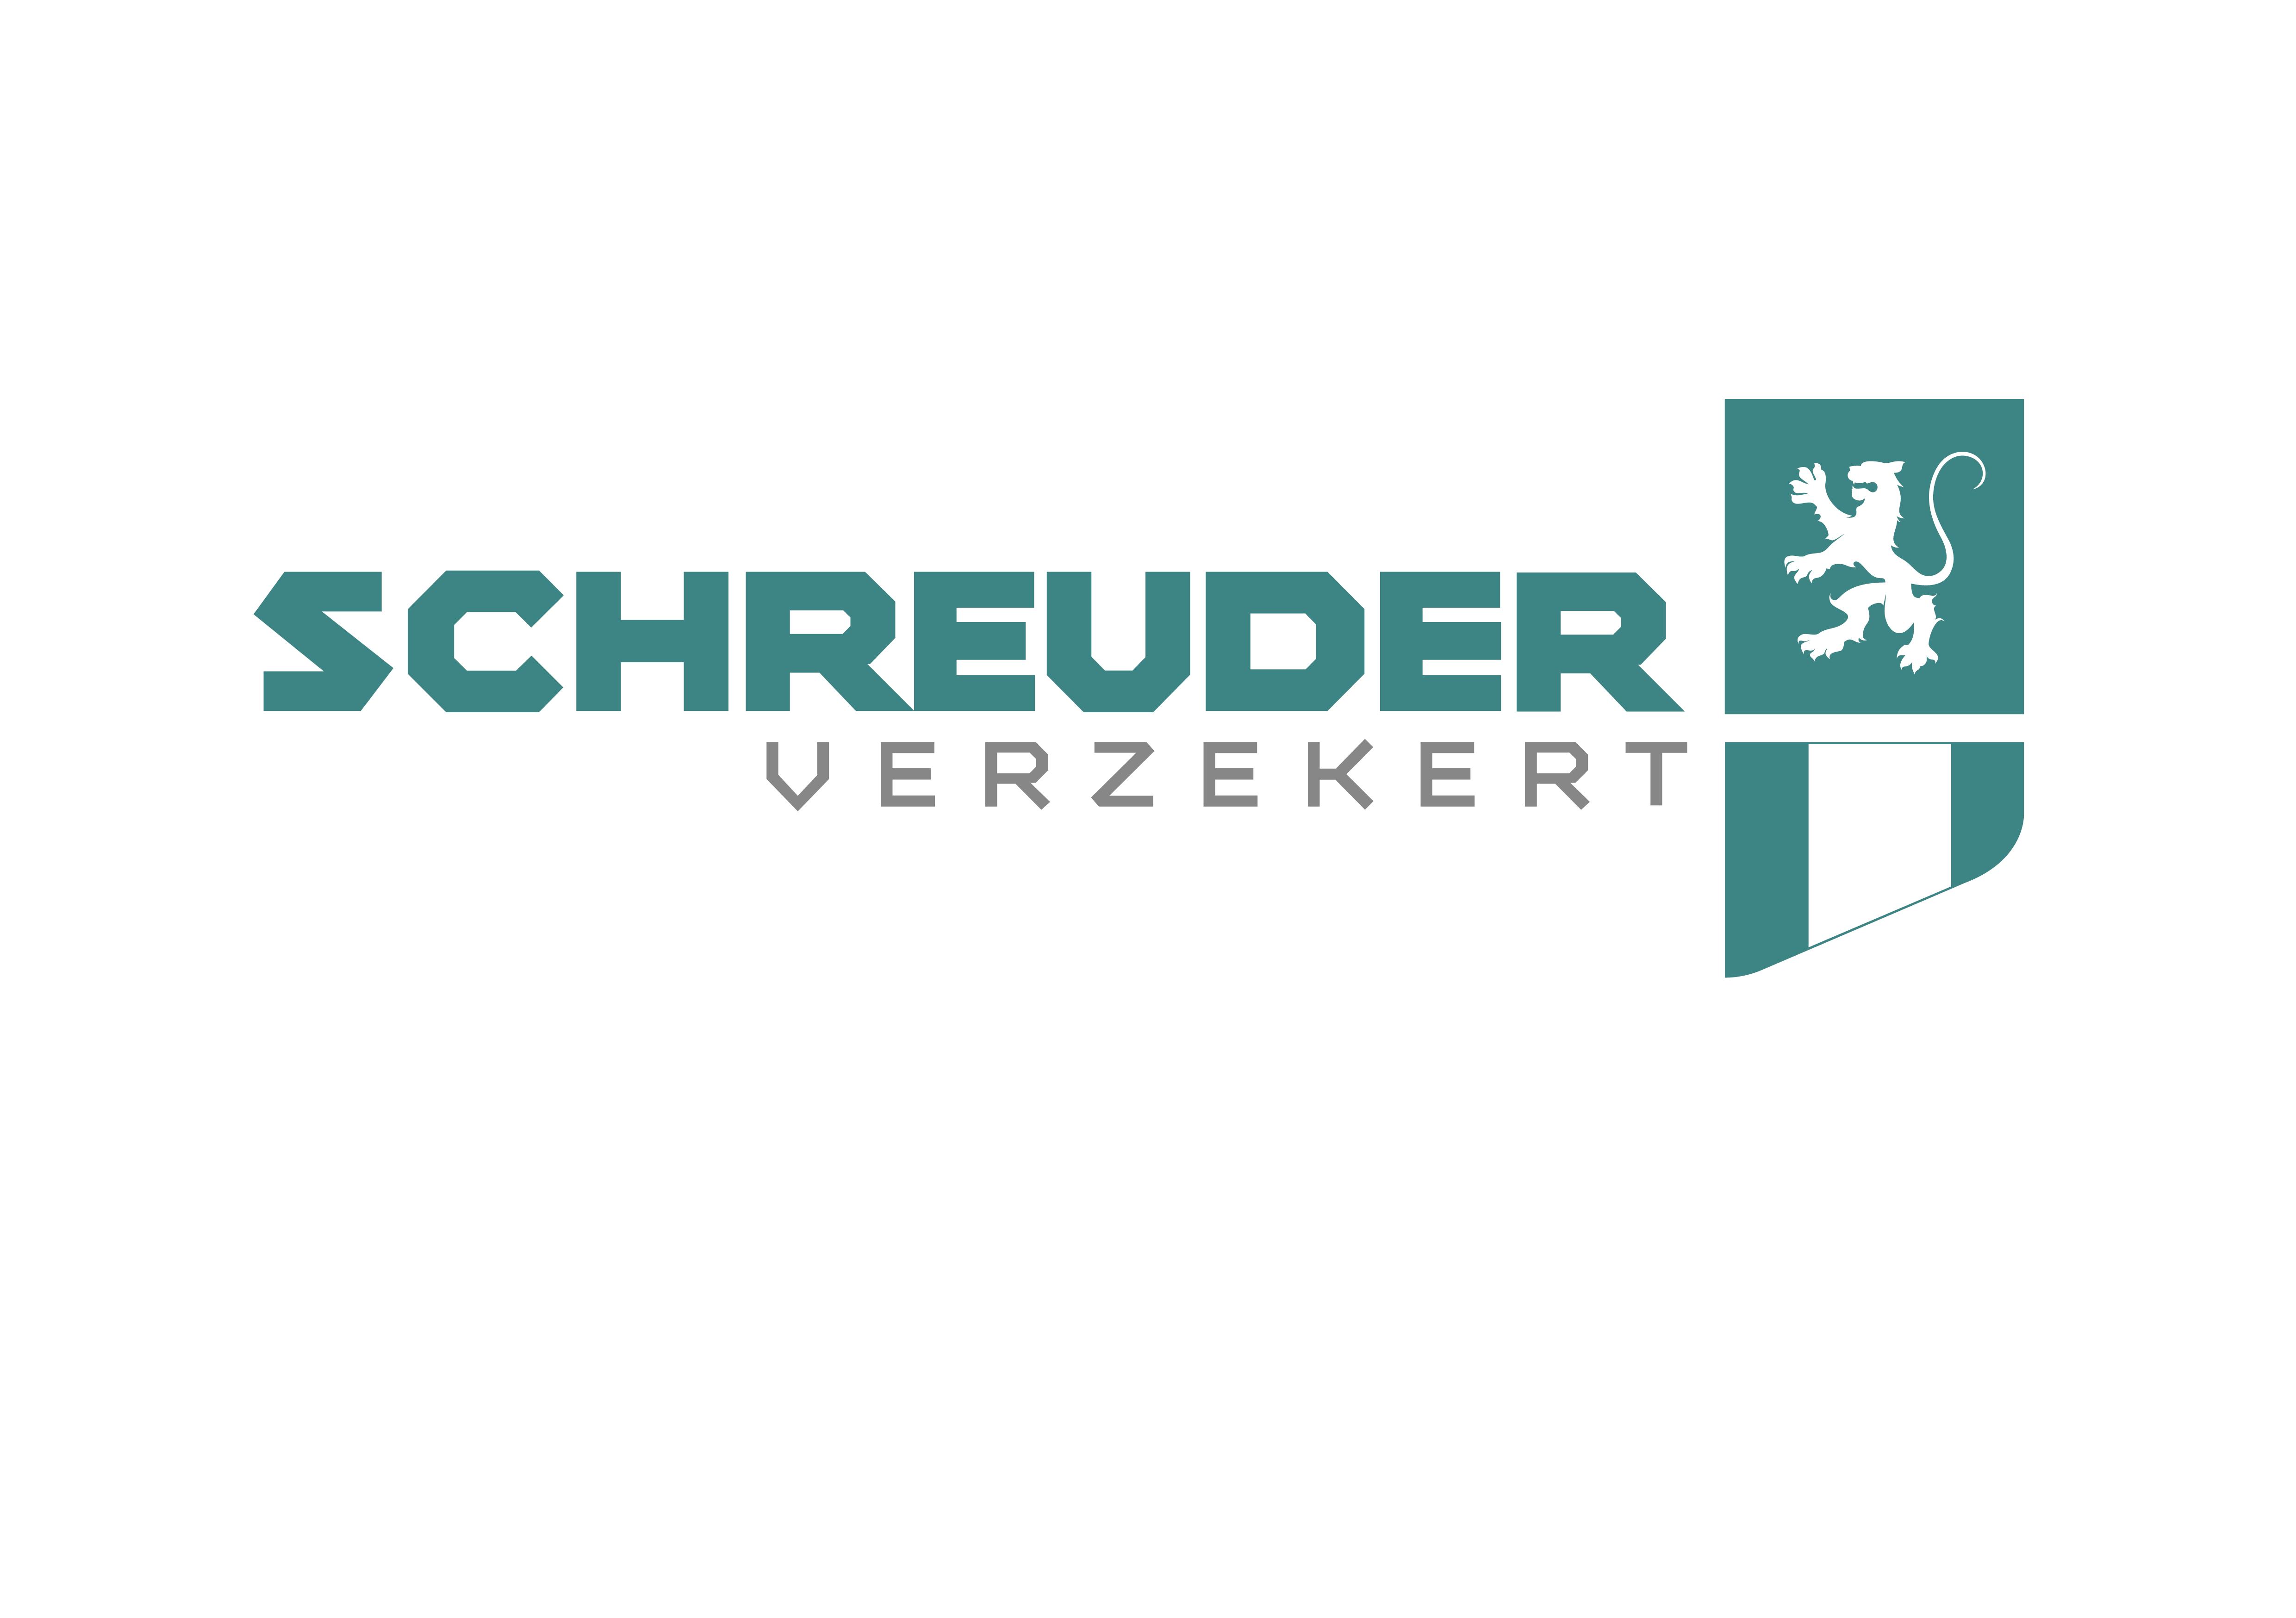 Schreuder & Co en Biemond Moerman & Wichers samen verder als Schreuder Verzekert